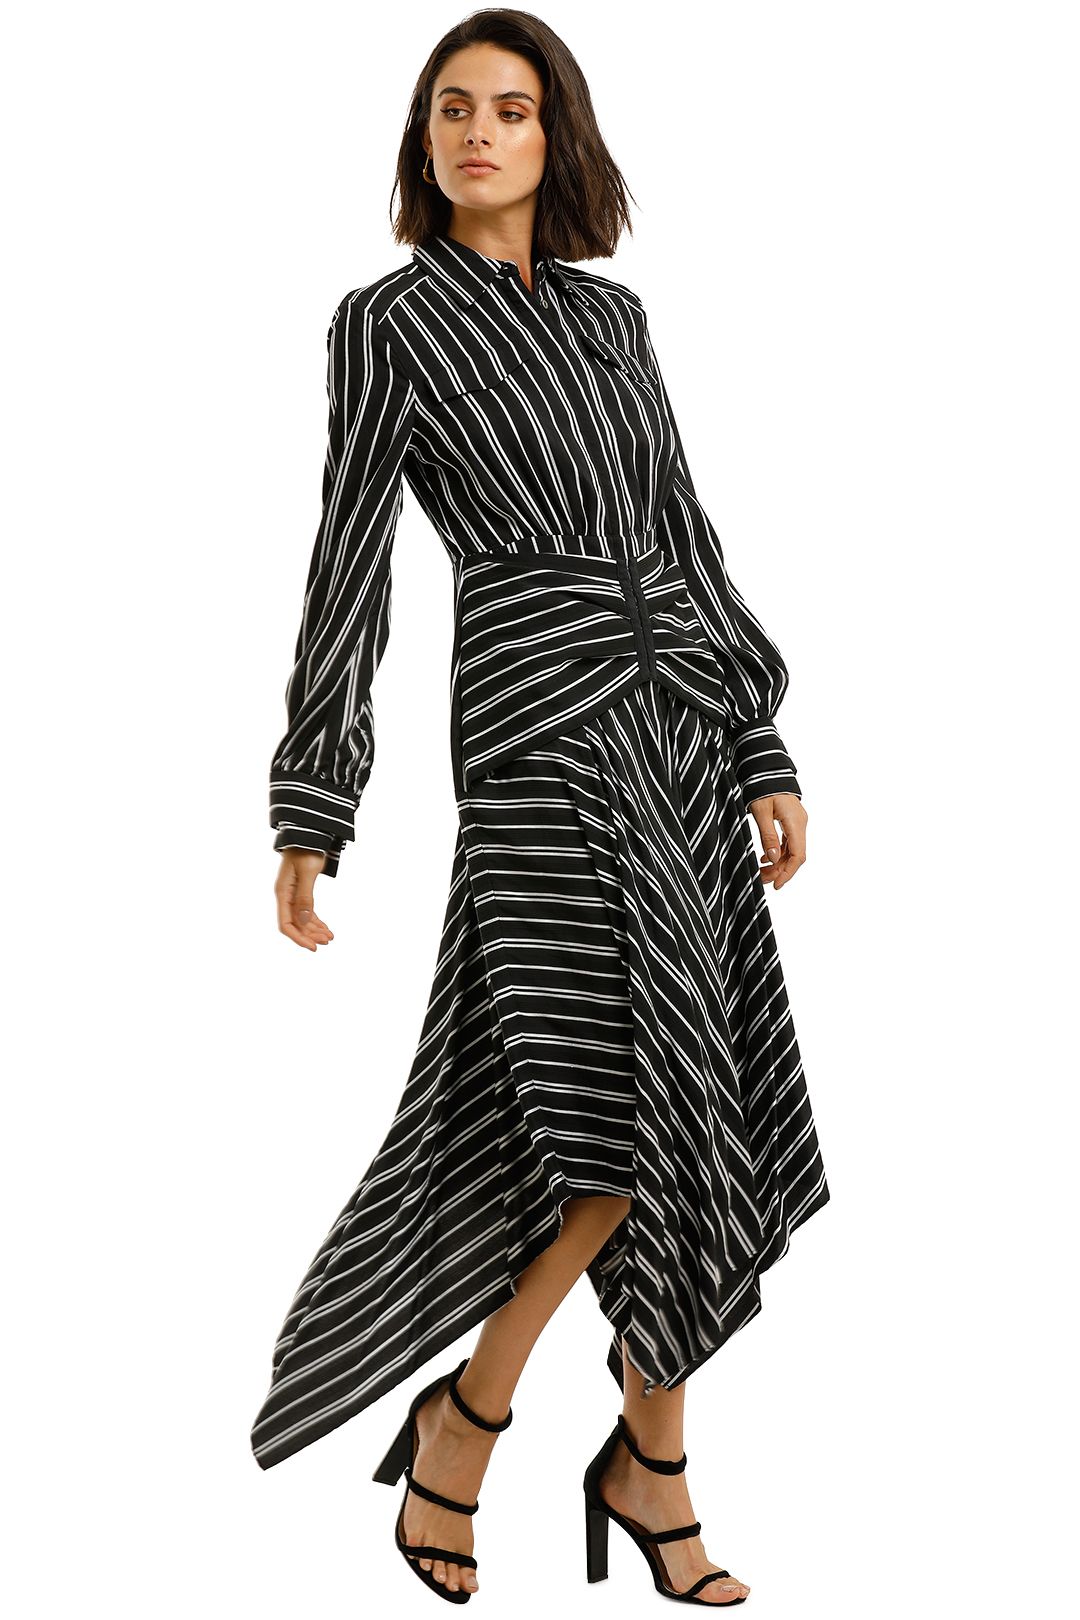 Cresler Dress in Navy Stripe by Acler for Hire | GlamCorner